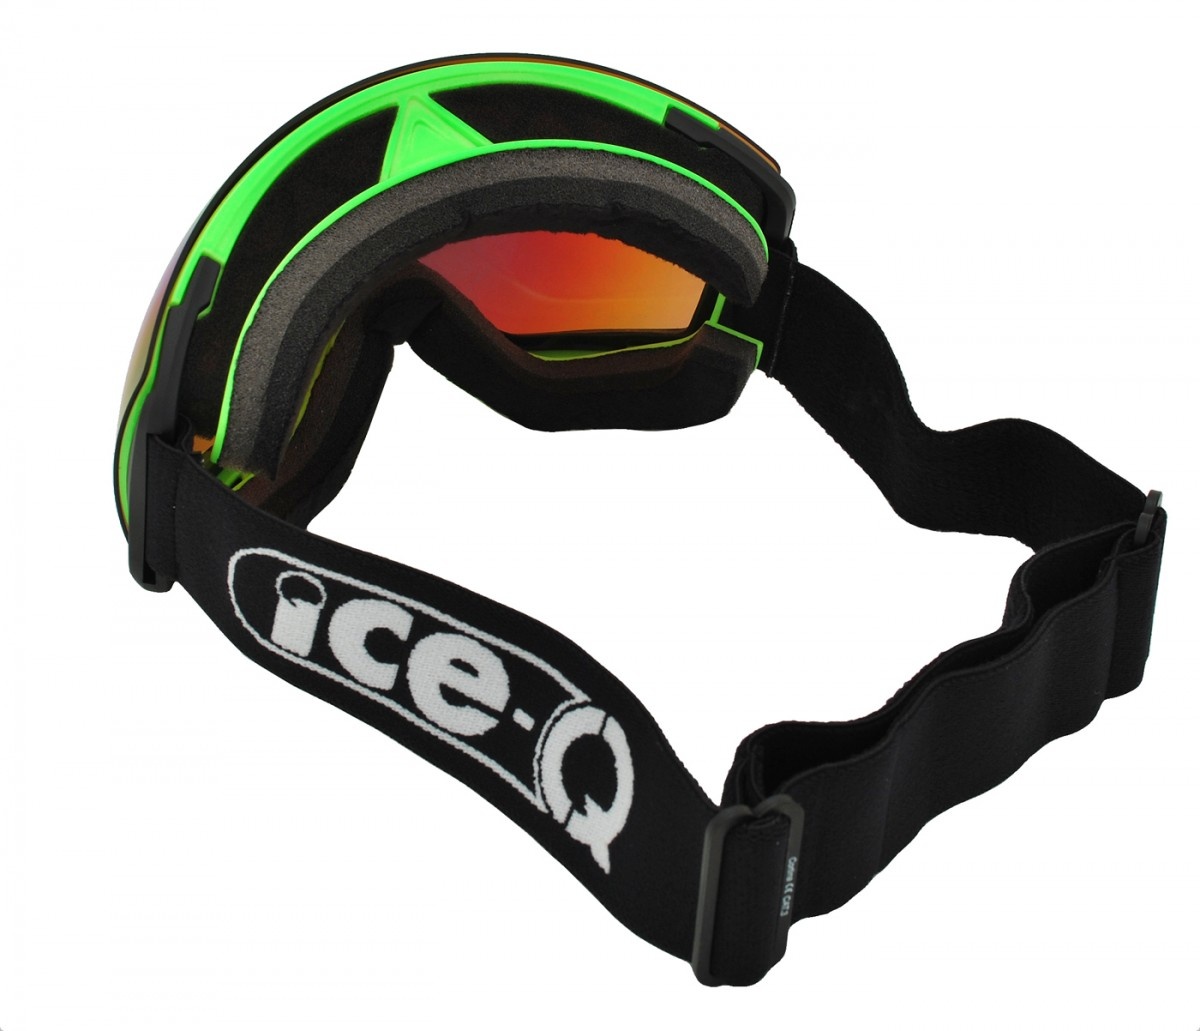 Gogle narciarskie Ice-Q Cortina 2 OTG na okulary